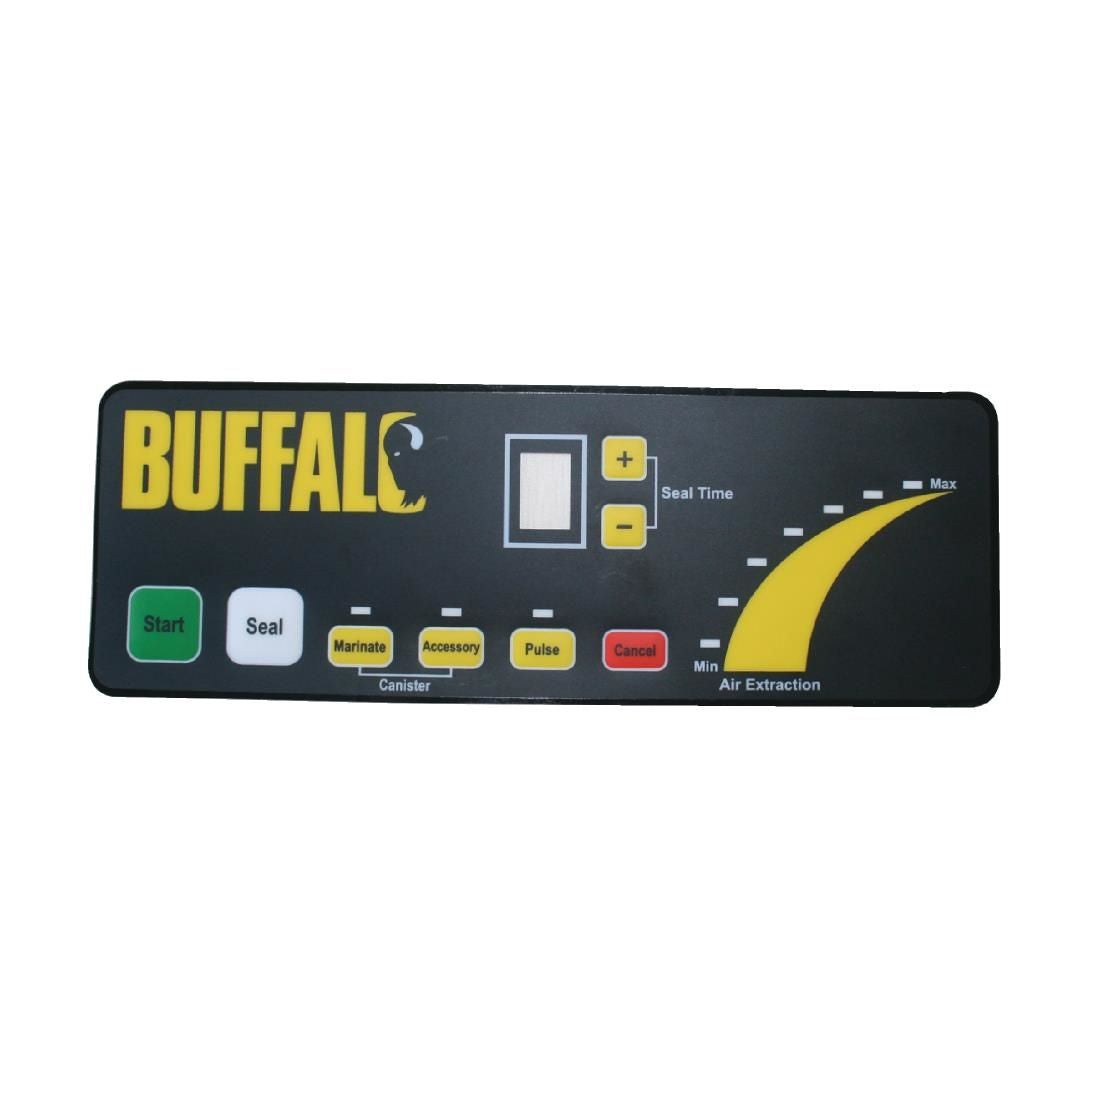 Buffalo Display Panel JD Catering Equipment Solutions Ltd